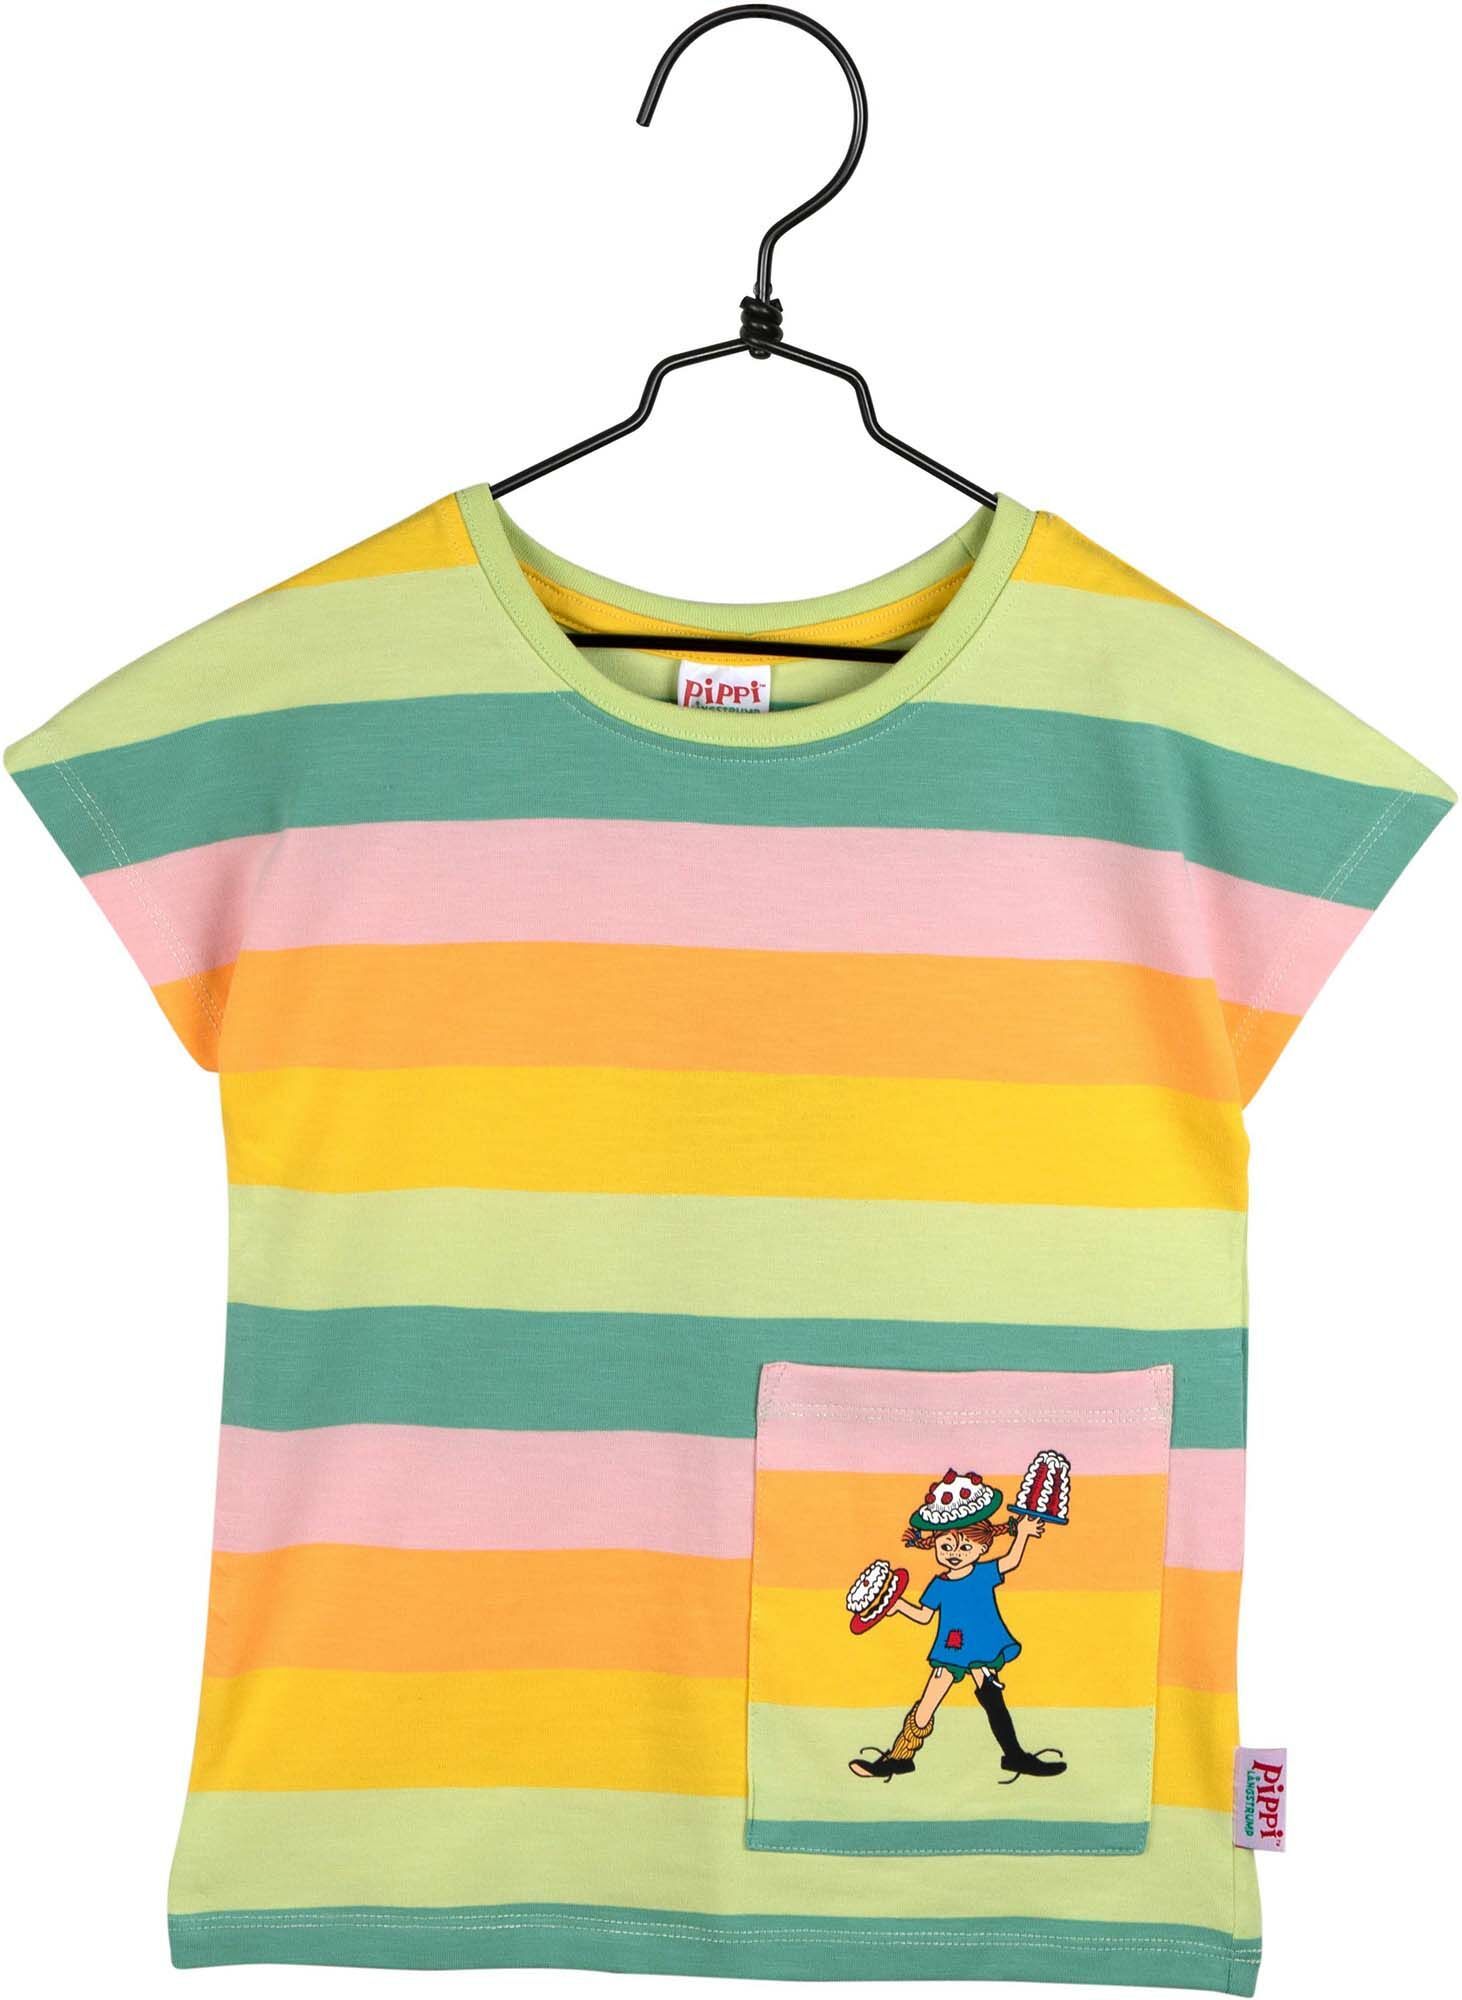 Pippi Långstrump Regnbåge T-Shirt Grön 110